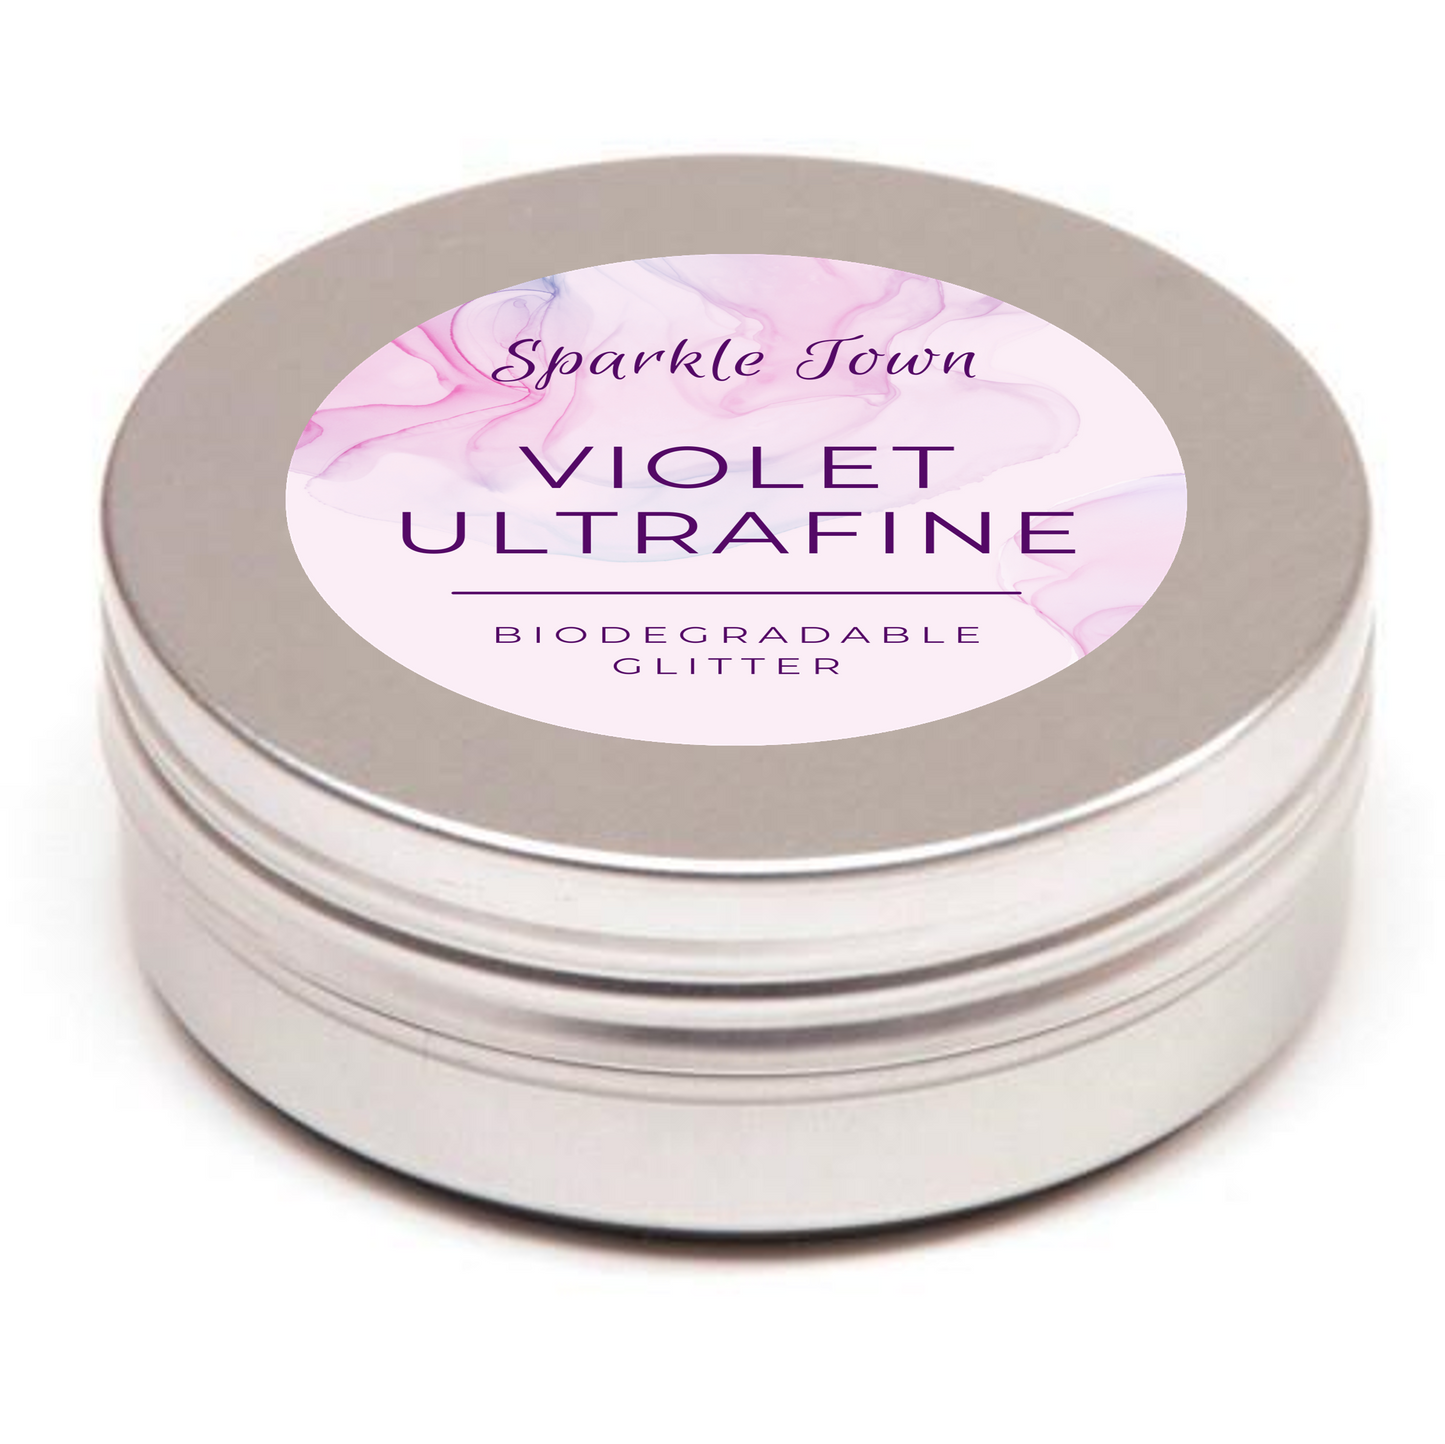 Violet Ultrafine Biodegradable Glitter